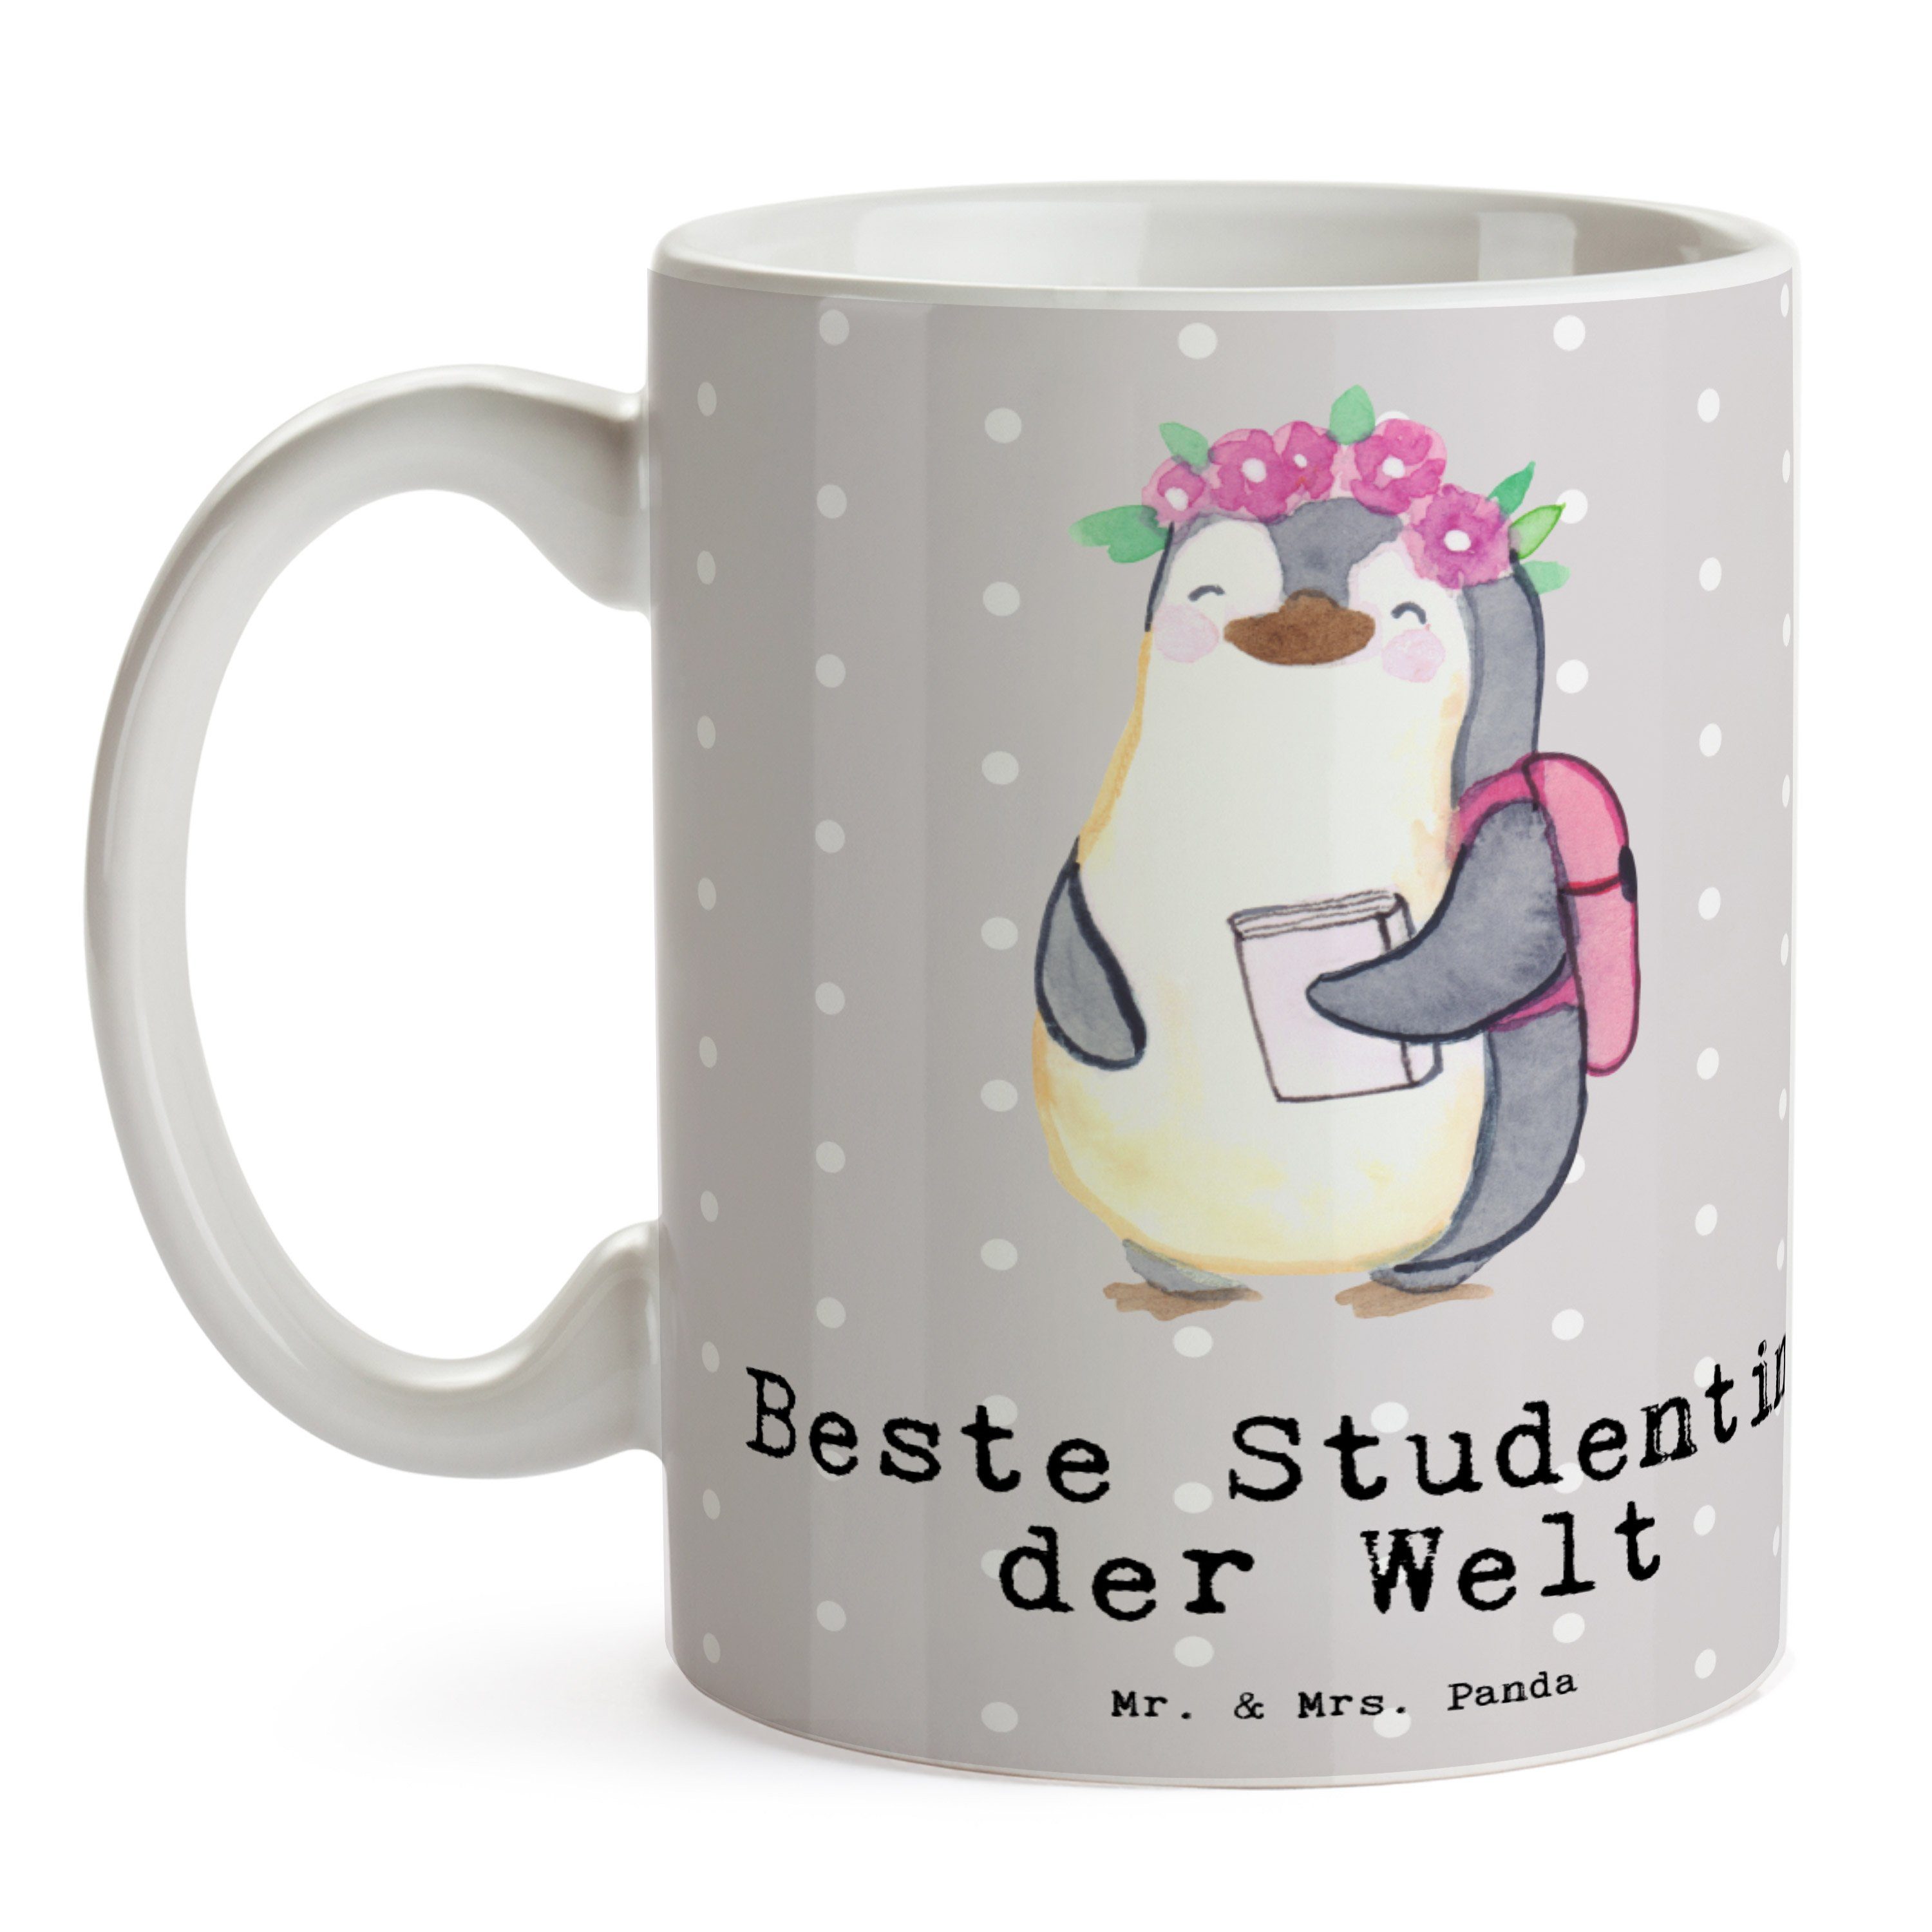 Grau ma, Studentin - Welt Geschenk, Beste der Tasse Keramik - Mrs. Mr. & Panda Pinguin Freude Pastell